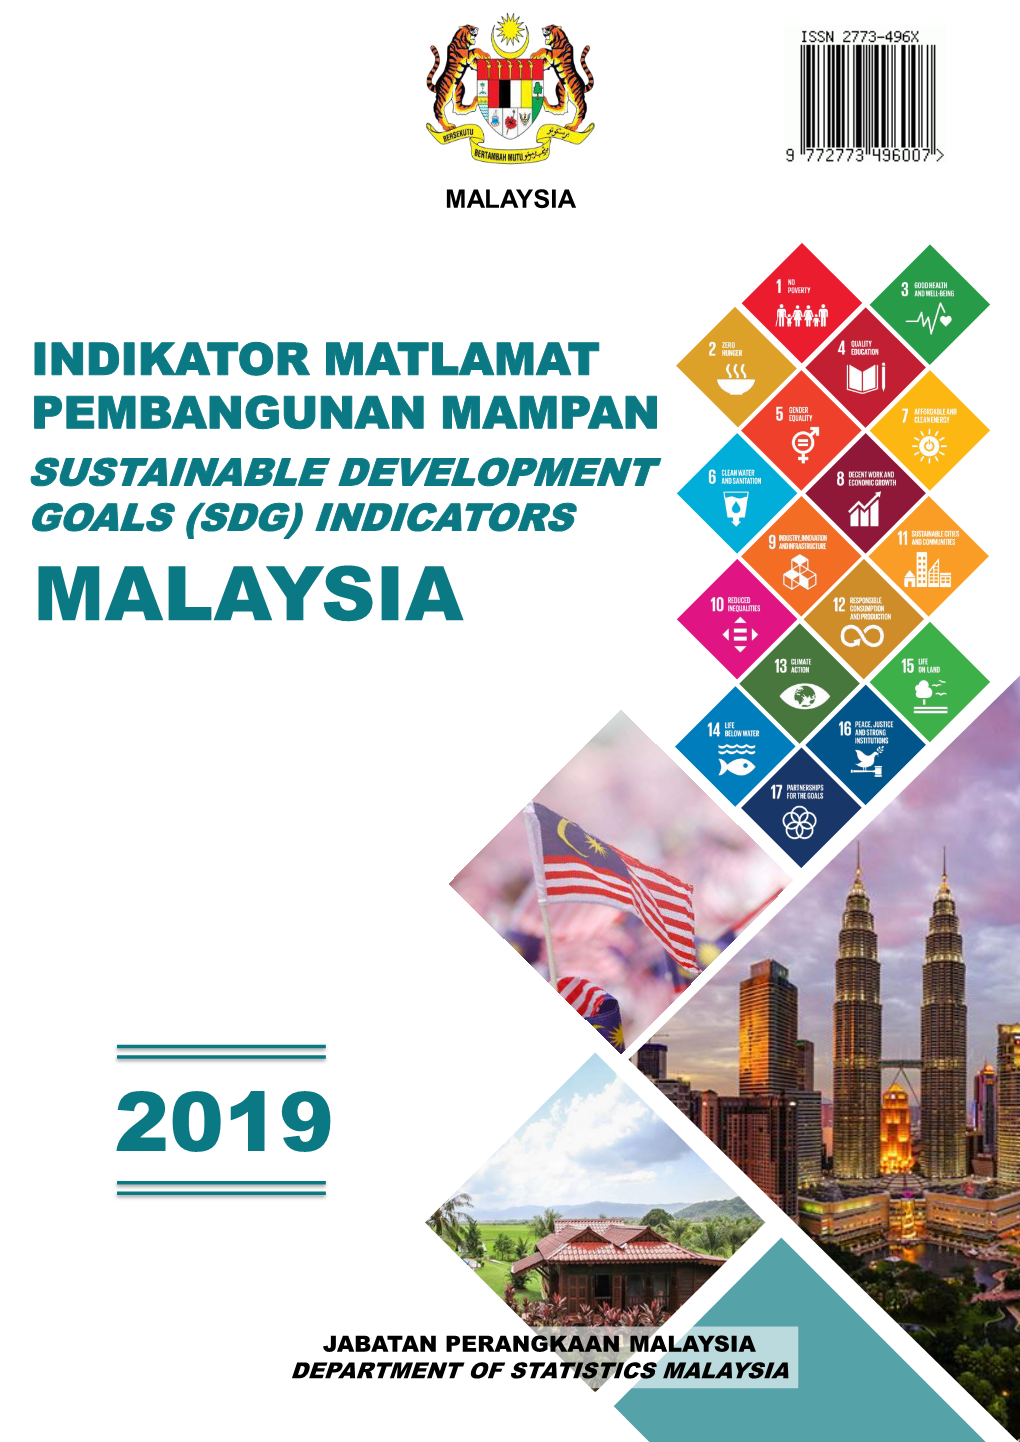 (Sdg) Indicators Malaysia 2019